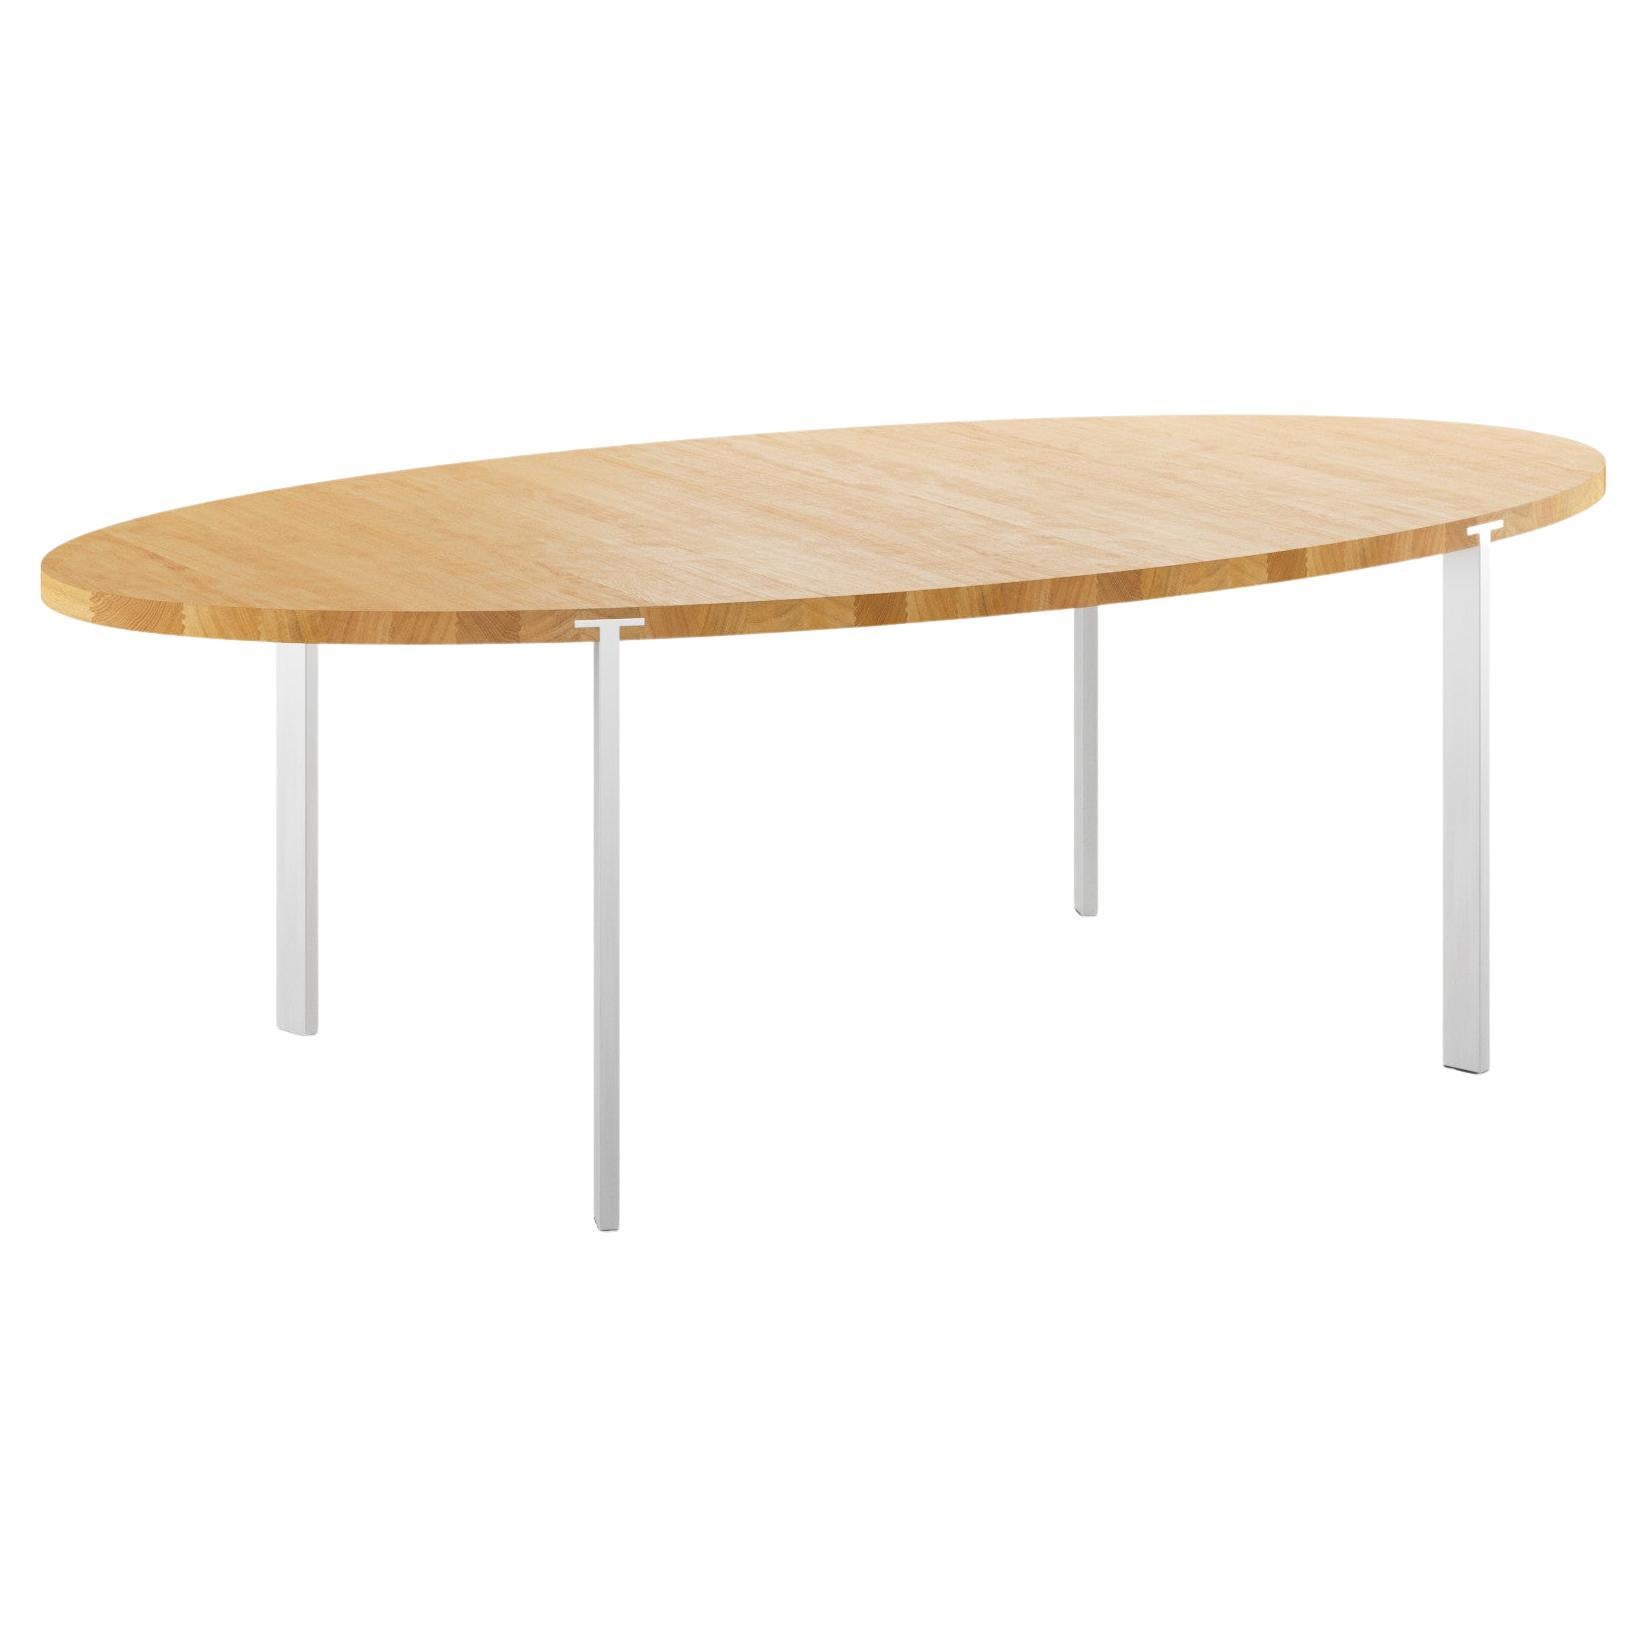 Gm2152 Oval Table, Oak Oiled - Design by Nissen & Gehl Mdd For Sale